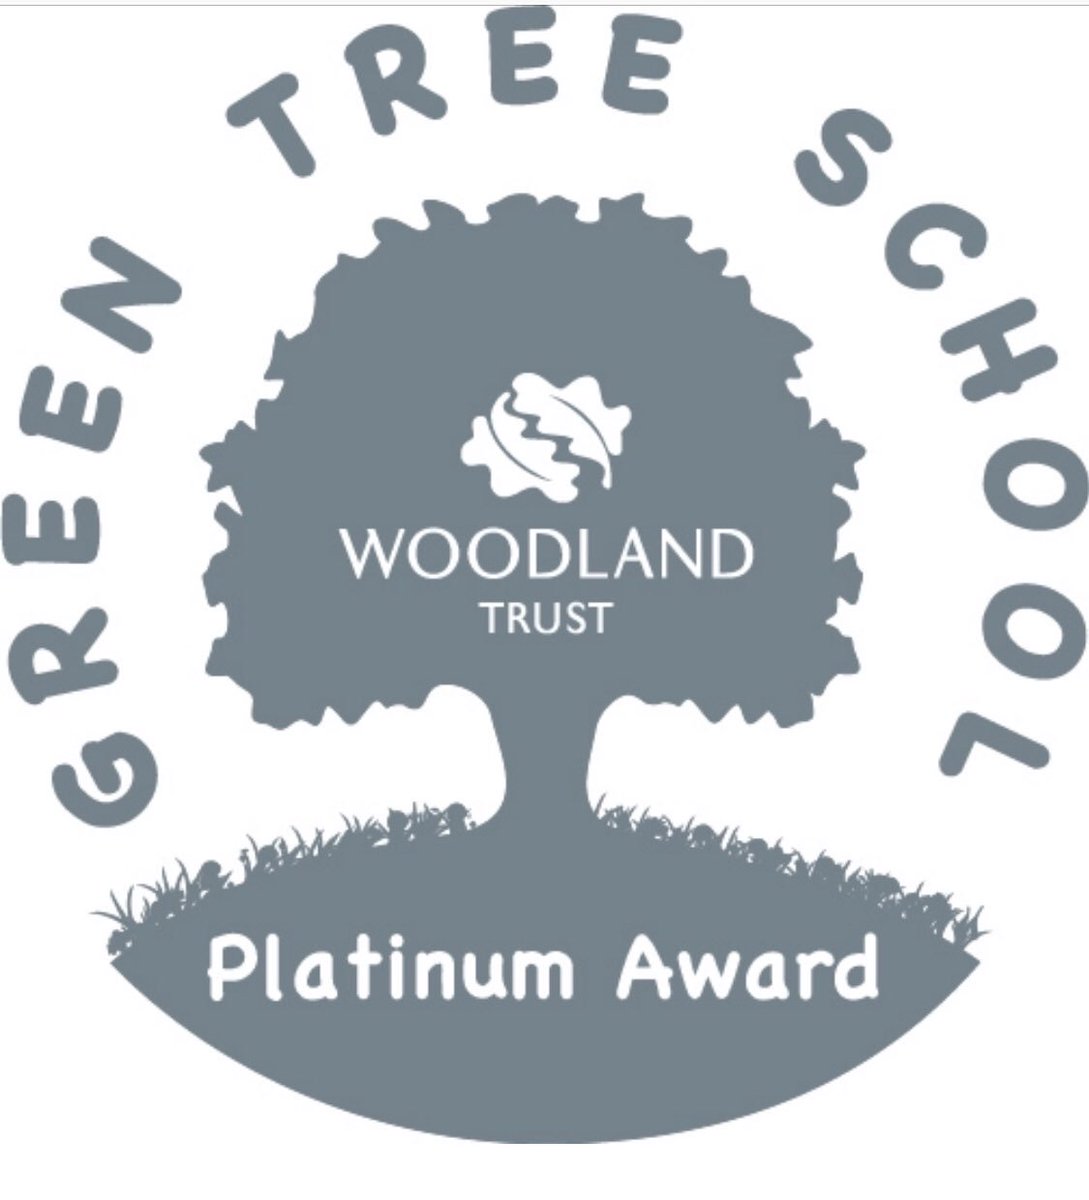 Well done Warkworth Primary 👏 we’ve got the Platinum Award for all our Forest School and outdoor education #platinum #woodlandtrust #greentreeschool #topaward #loveourworld #strivetogettherasone #ecoschool #greenflagaward